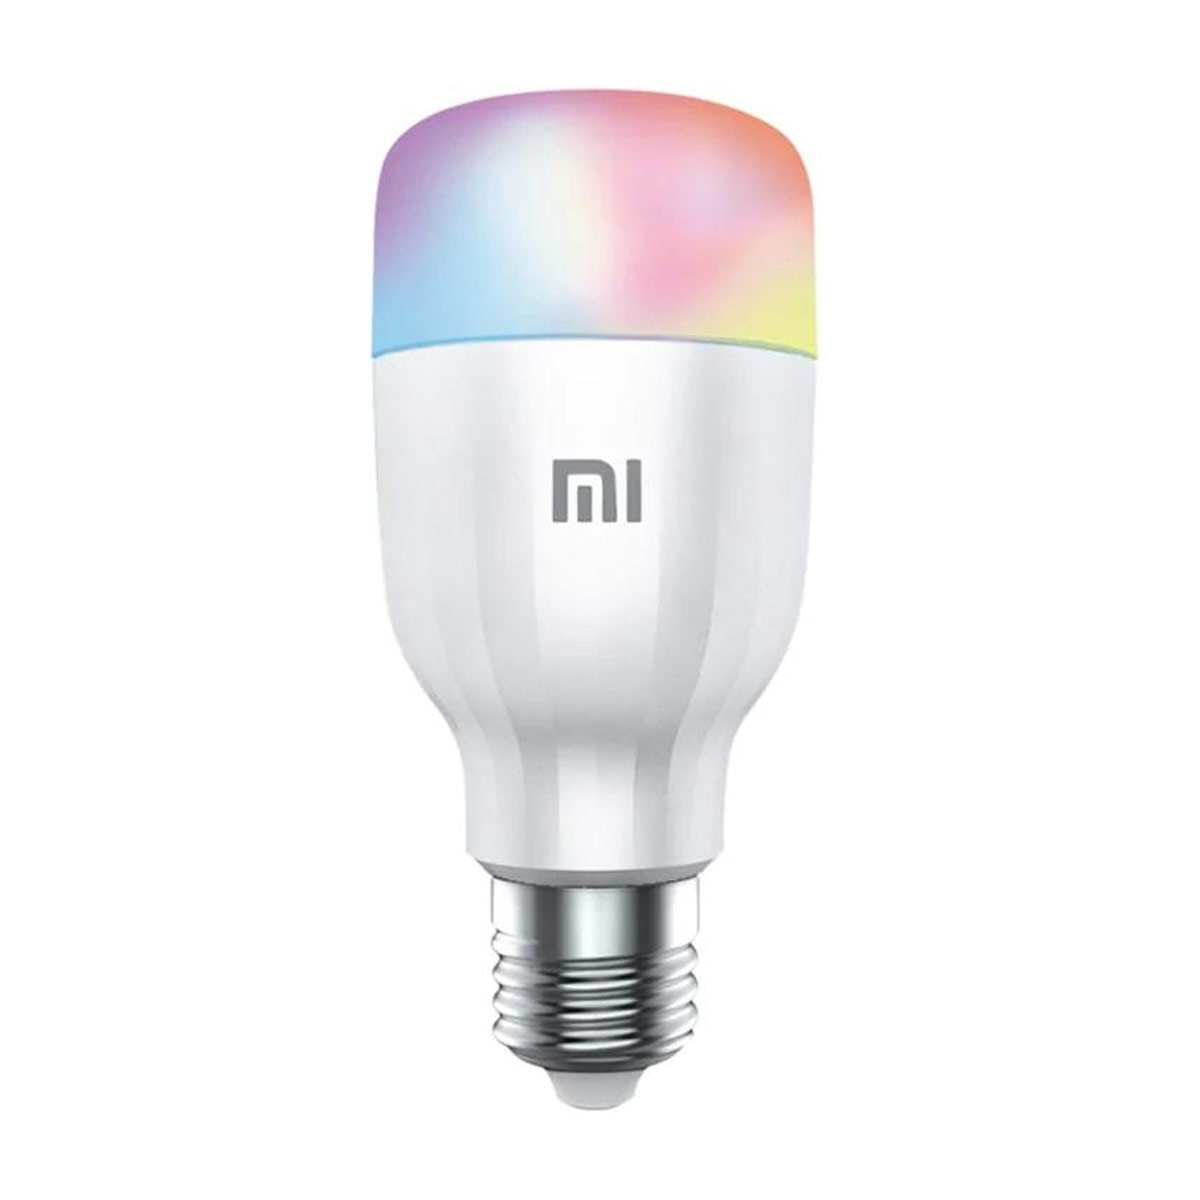 Lmpada Inteligente Xiaomi Mi Smart LED Bulb Essential (Branco + Cores) Wi-Fi 9W E27 1